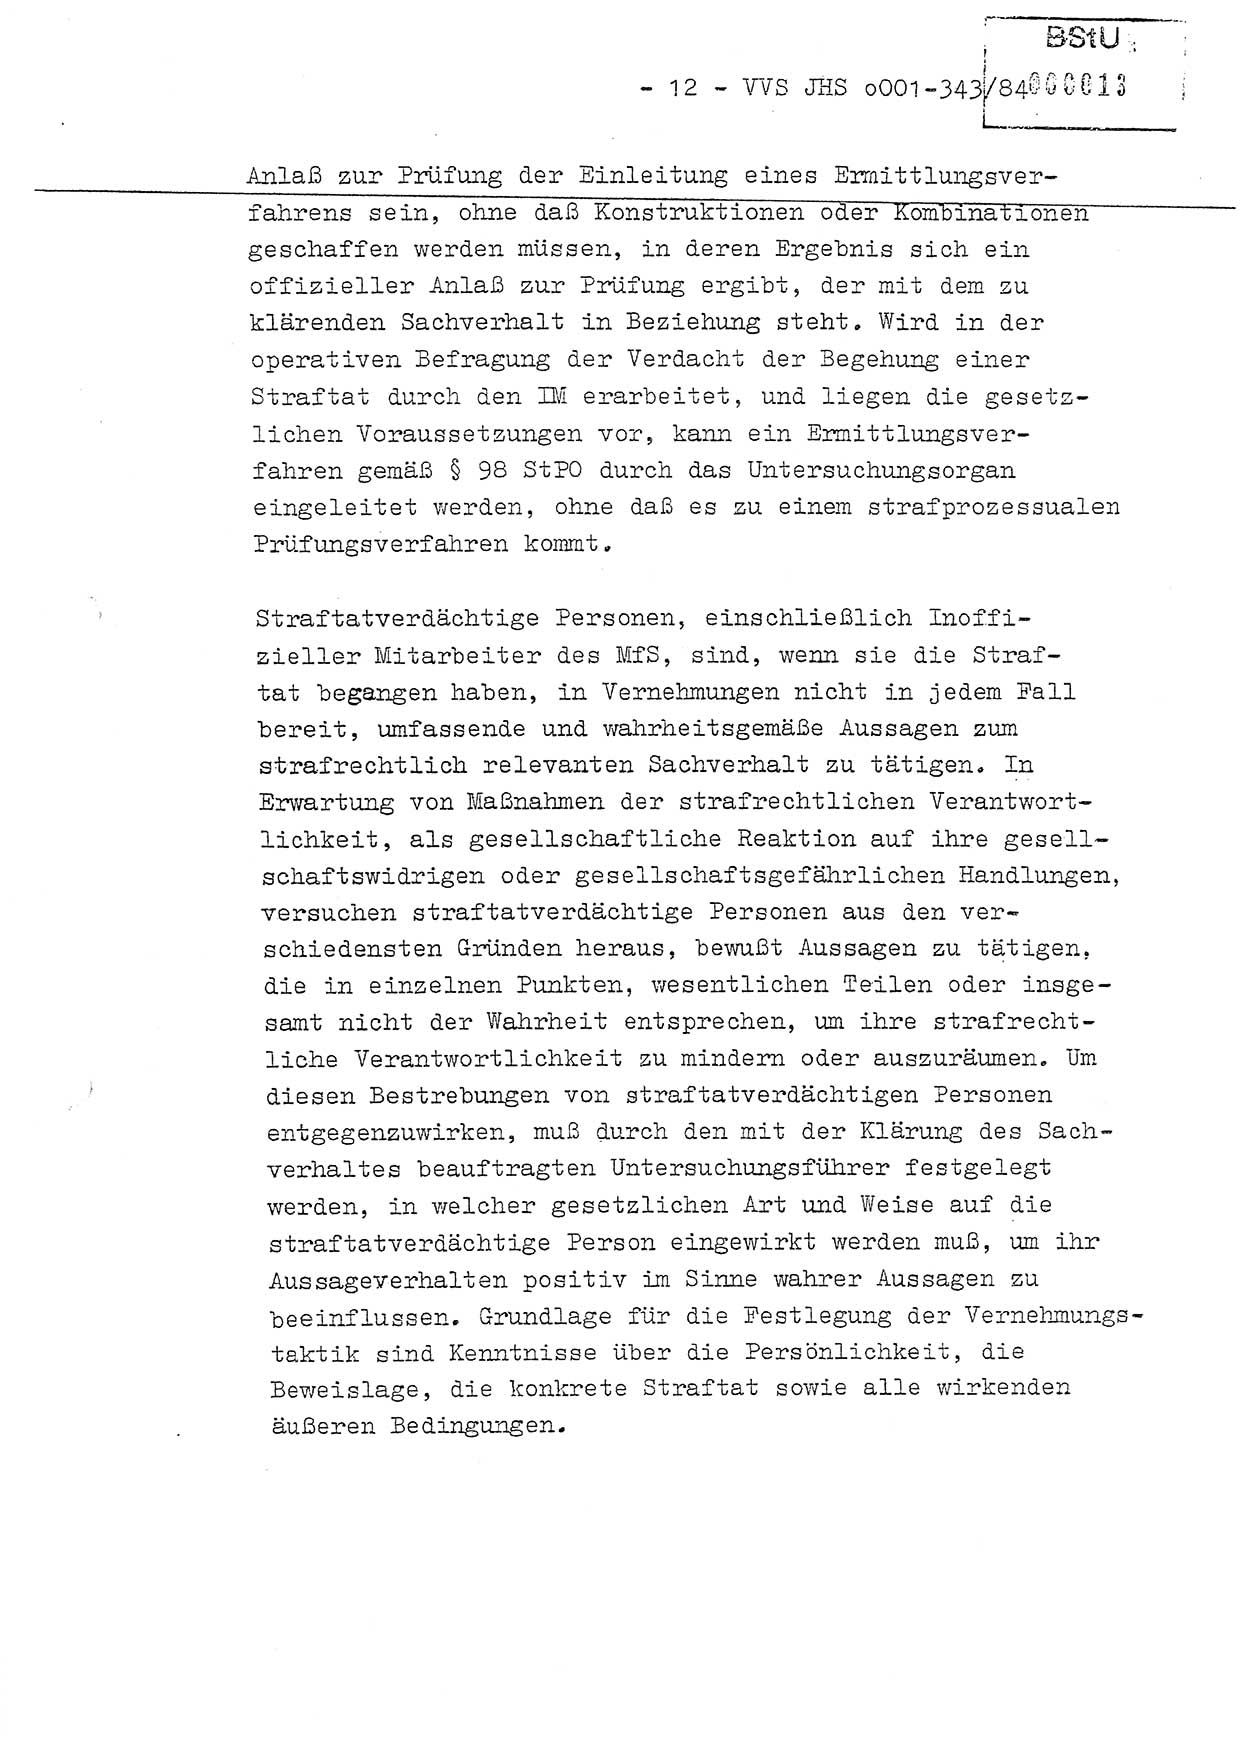 Diplomarbeit, Oberleutnant Bernd Michael (HA Ⅸ/5), Oberleutnant Peter Felber (HA IX/5), Ministerium für Staatssicherheit (MfS) [Deutsche Demokratische Republik (DDR)], Juristische Hochschule (JHS), Vertrauliche Verschlußsache (VVS) o001-343/84, Potsdam 1985, Seite 12 (Dipl.-Arb. MfS DDR JHS VVS o001-343/84 1985, S. 12)